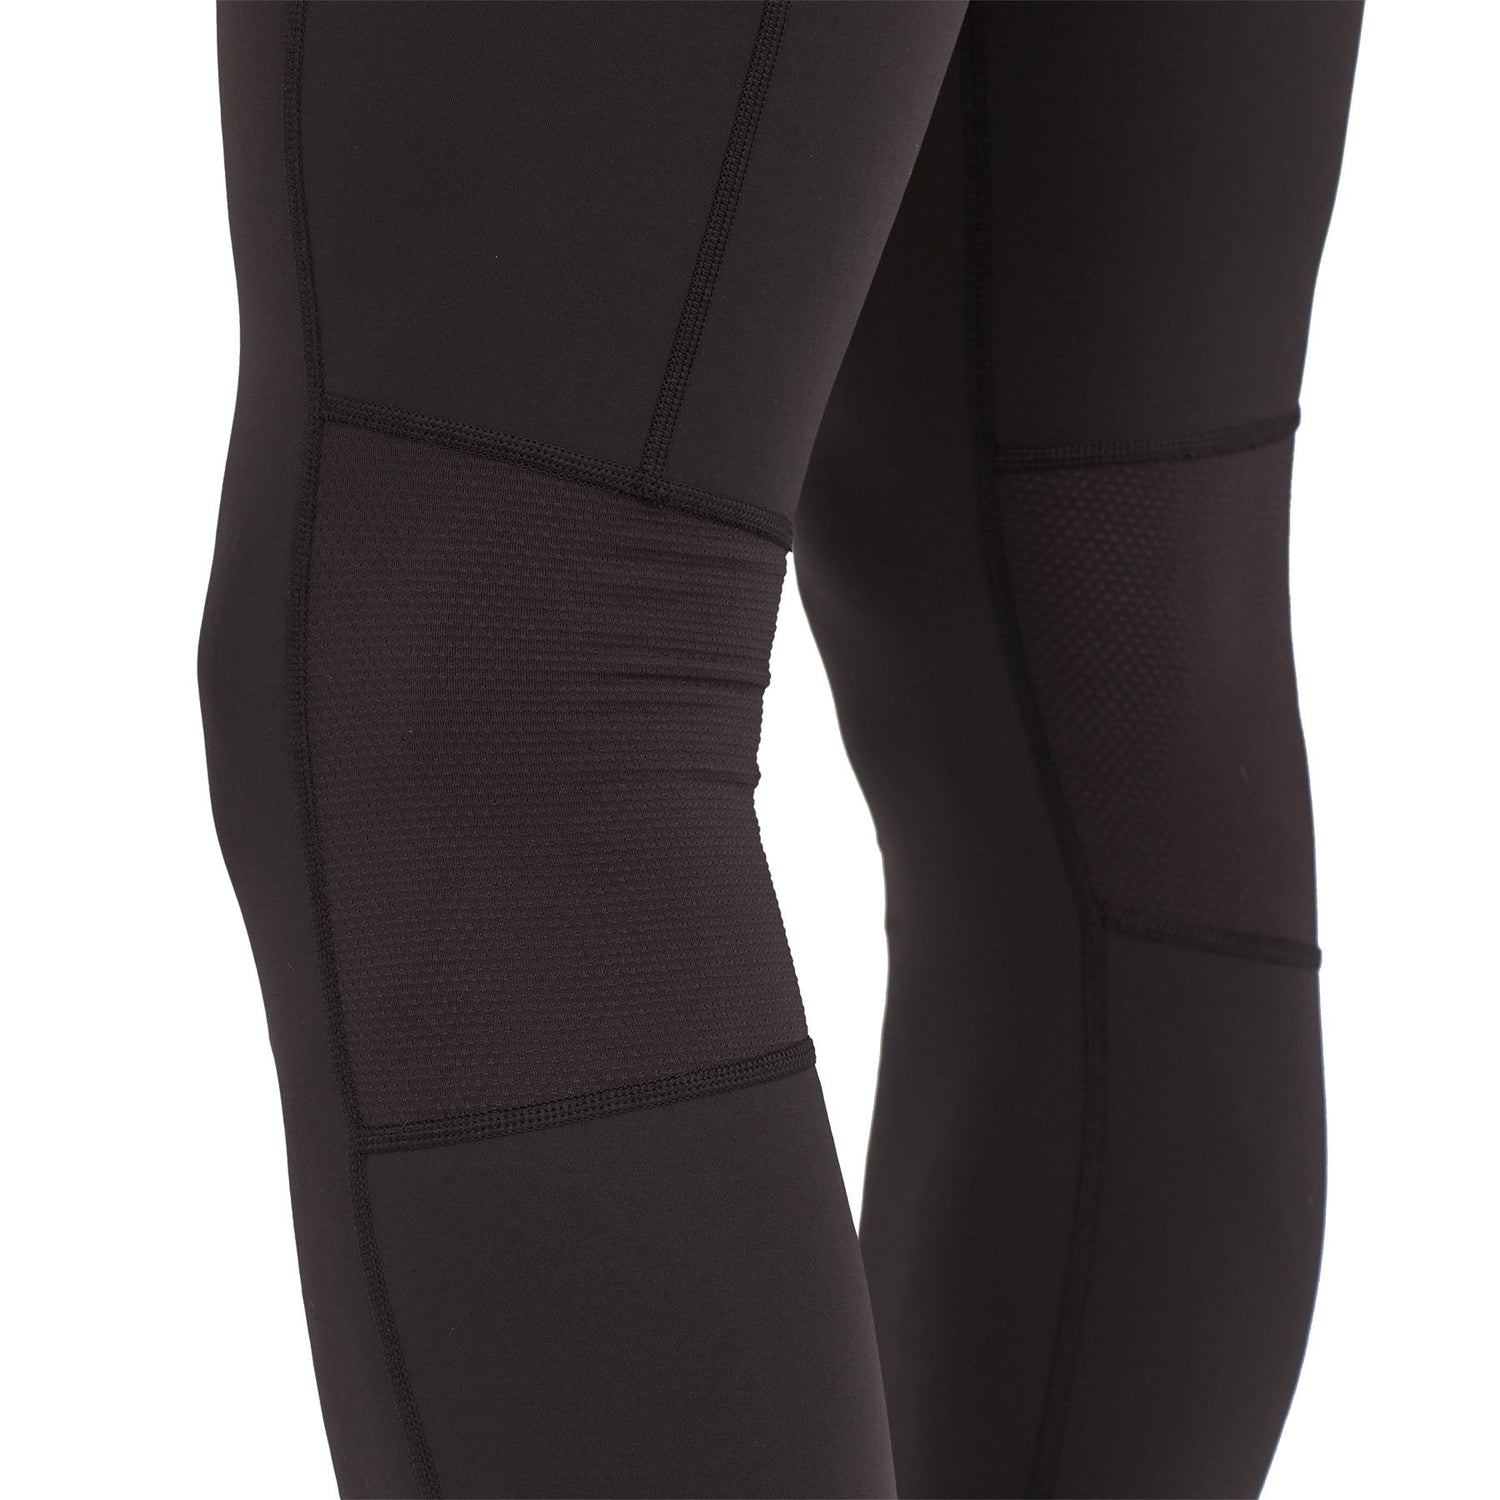 Patagonia M's Endless Run Tights - Recycled nylon Black Pants